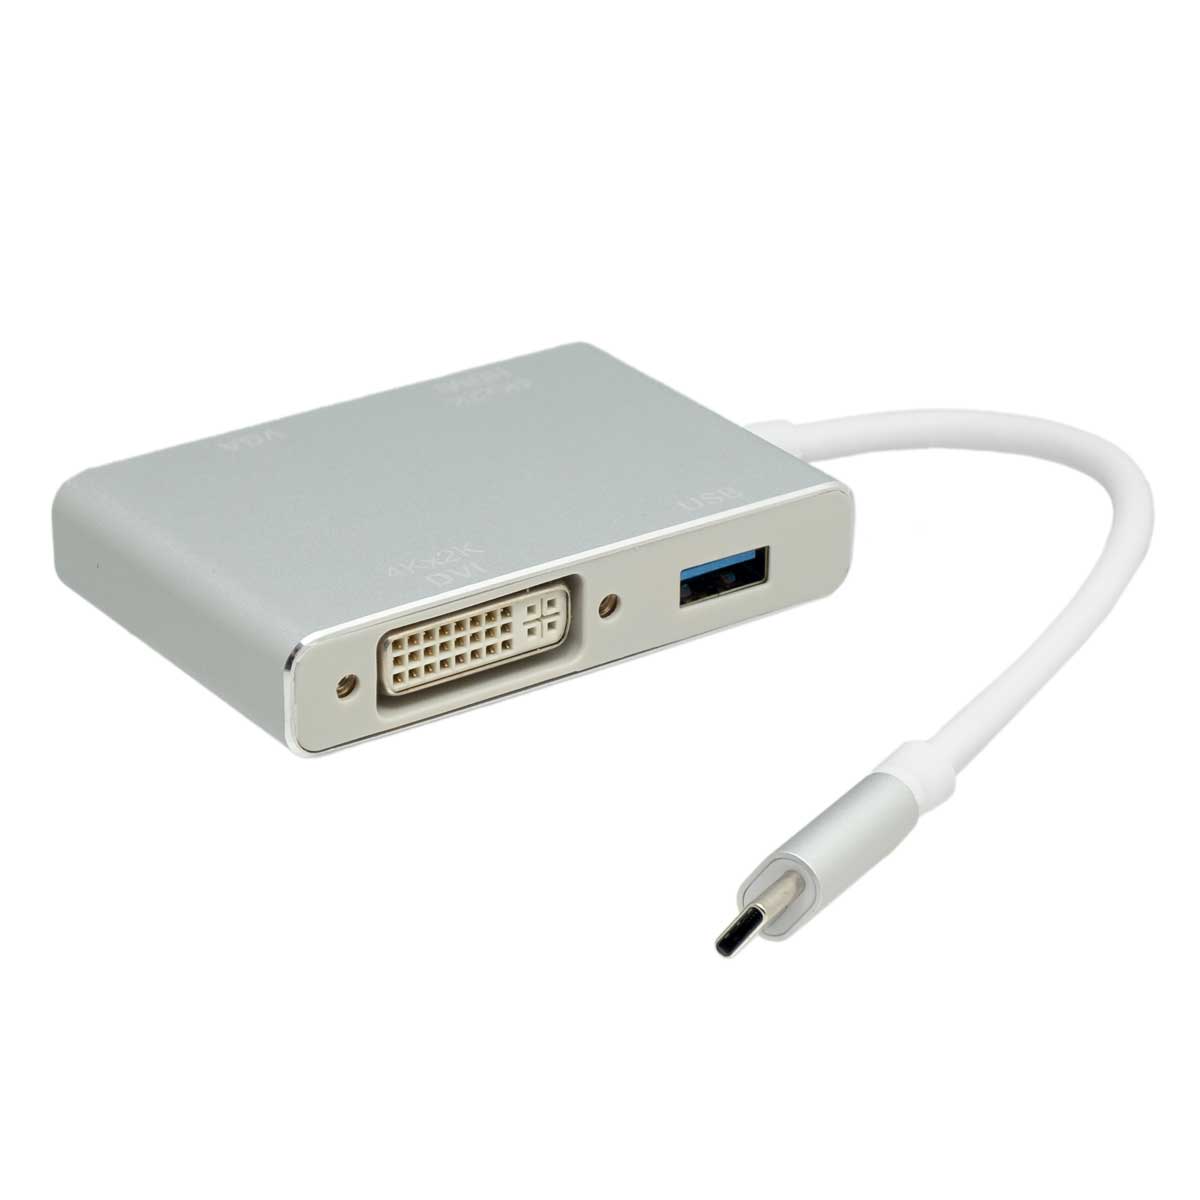 USB-C 3.1 to HDMI+VGA+DVI+USB 3.0, 15cm